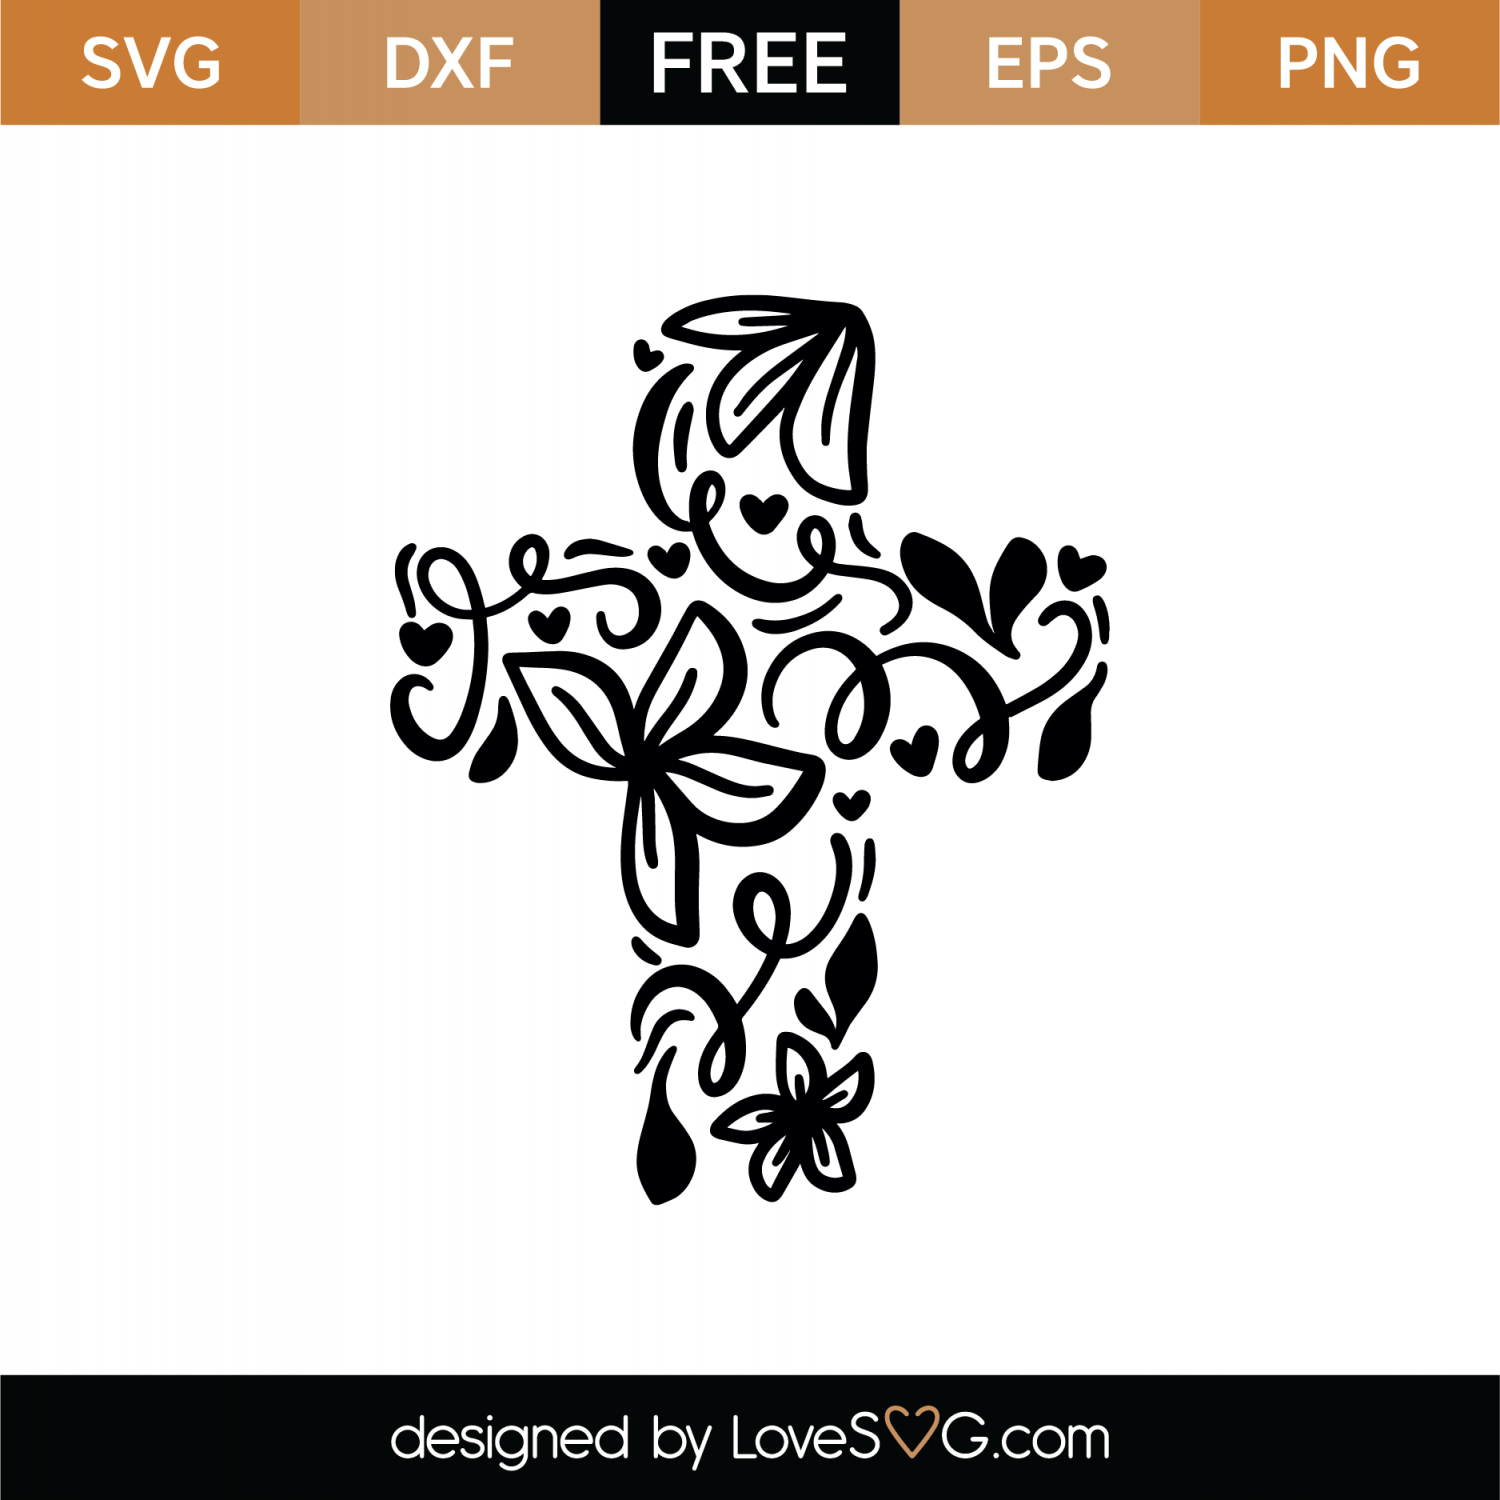 Download Free Cross Svg Cut File